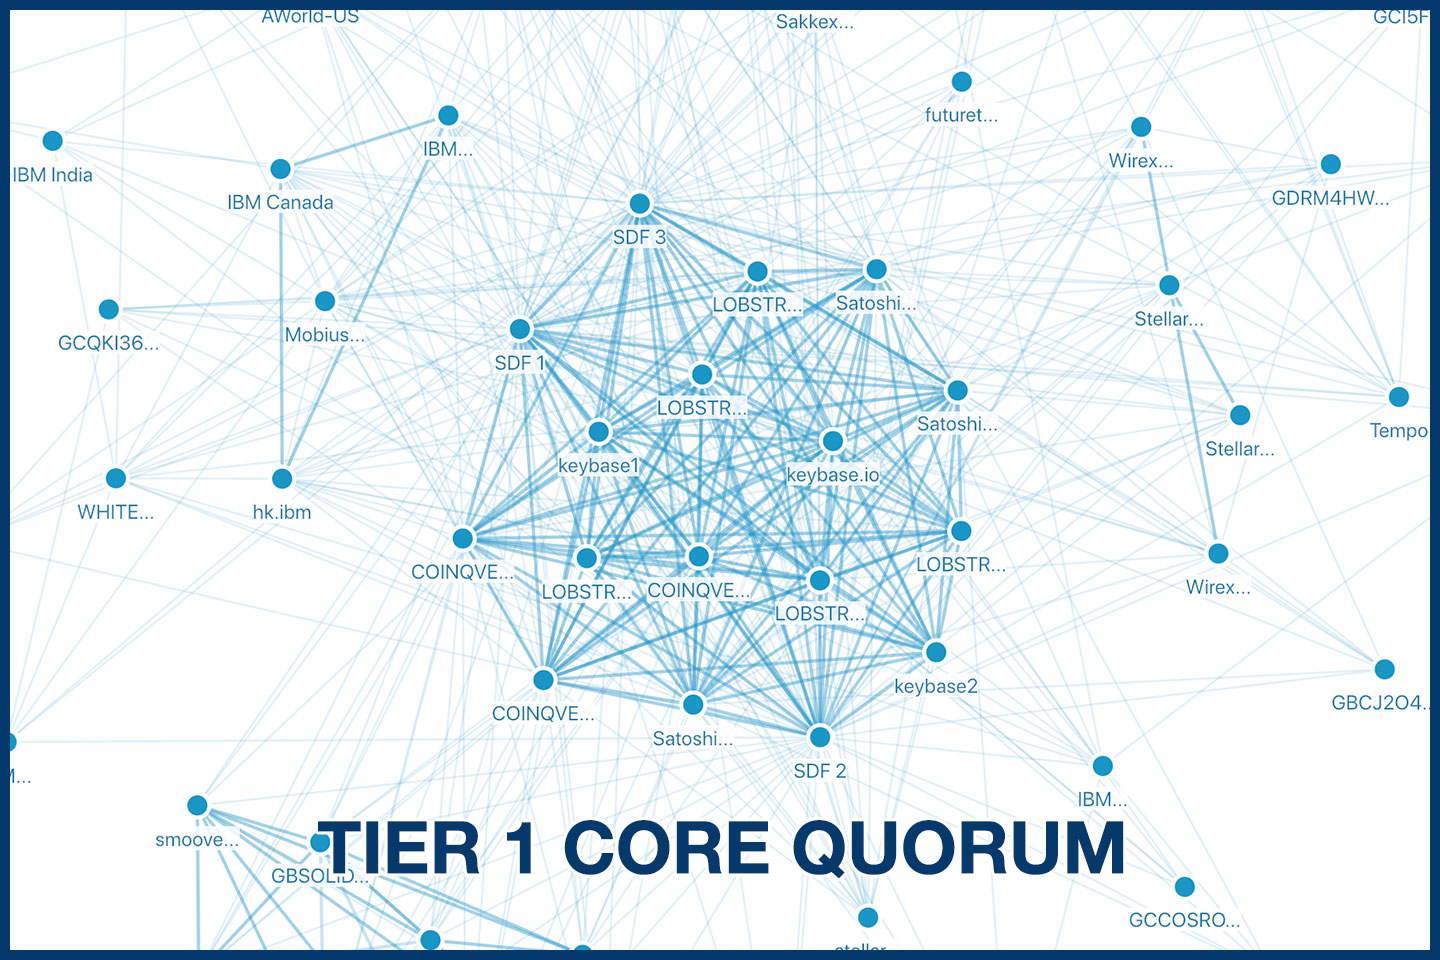 Tier 1 Core Quorum Group